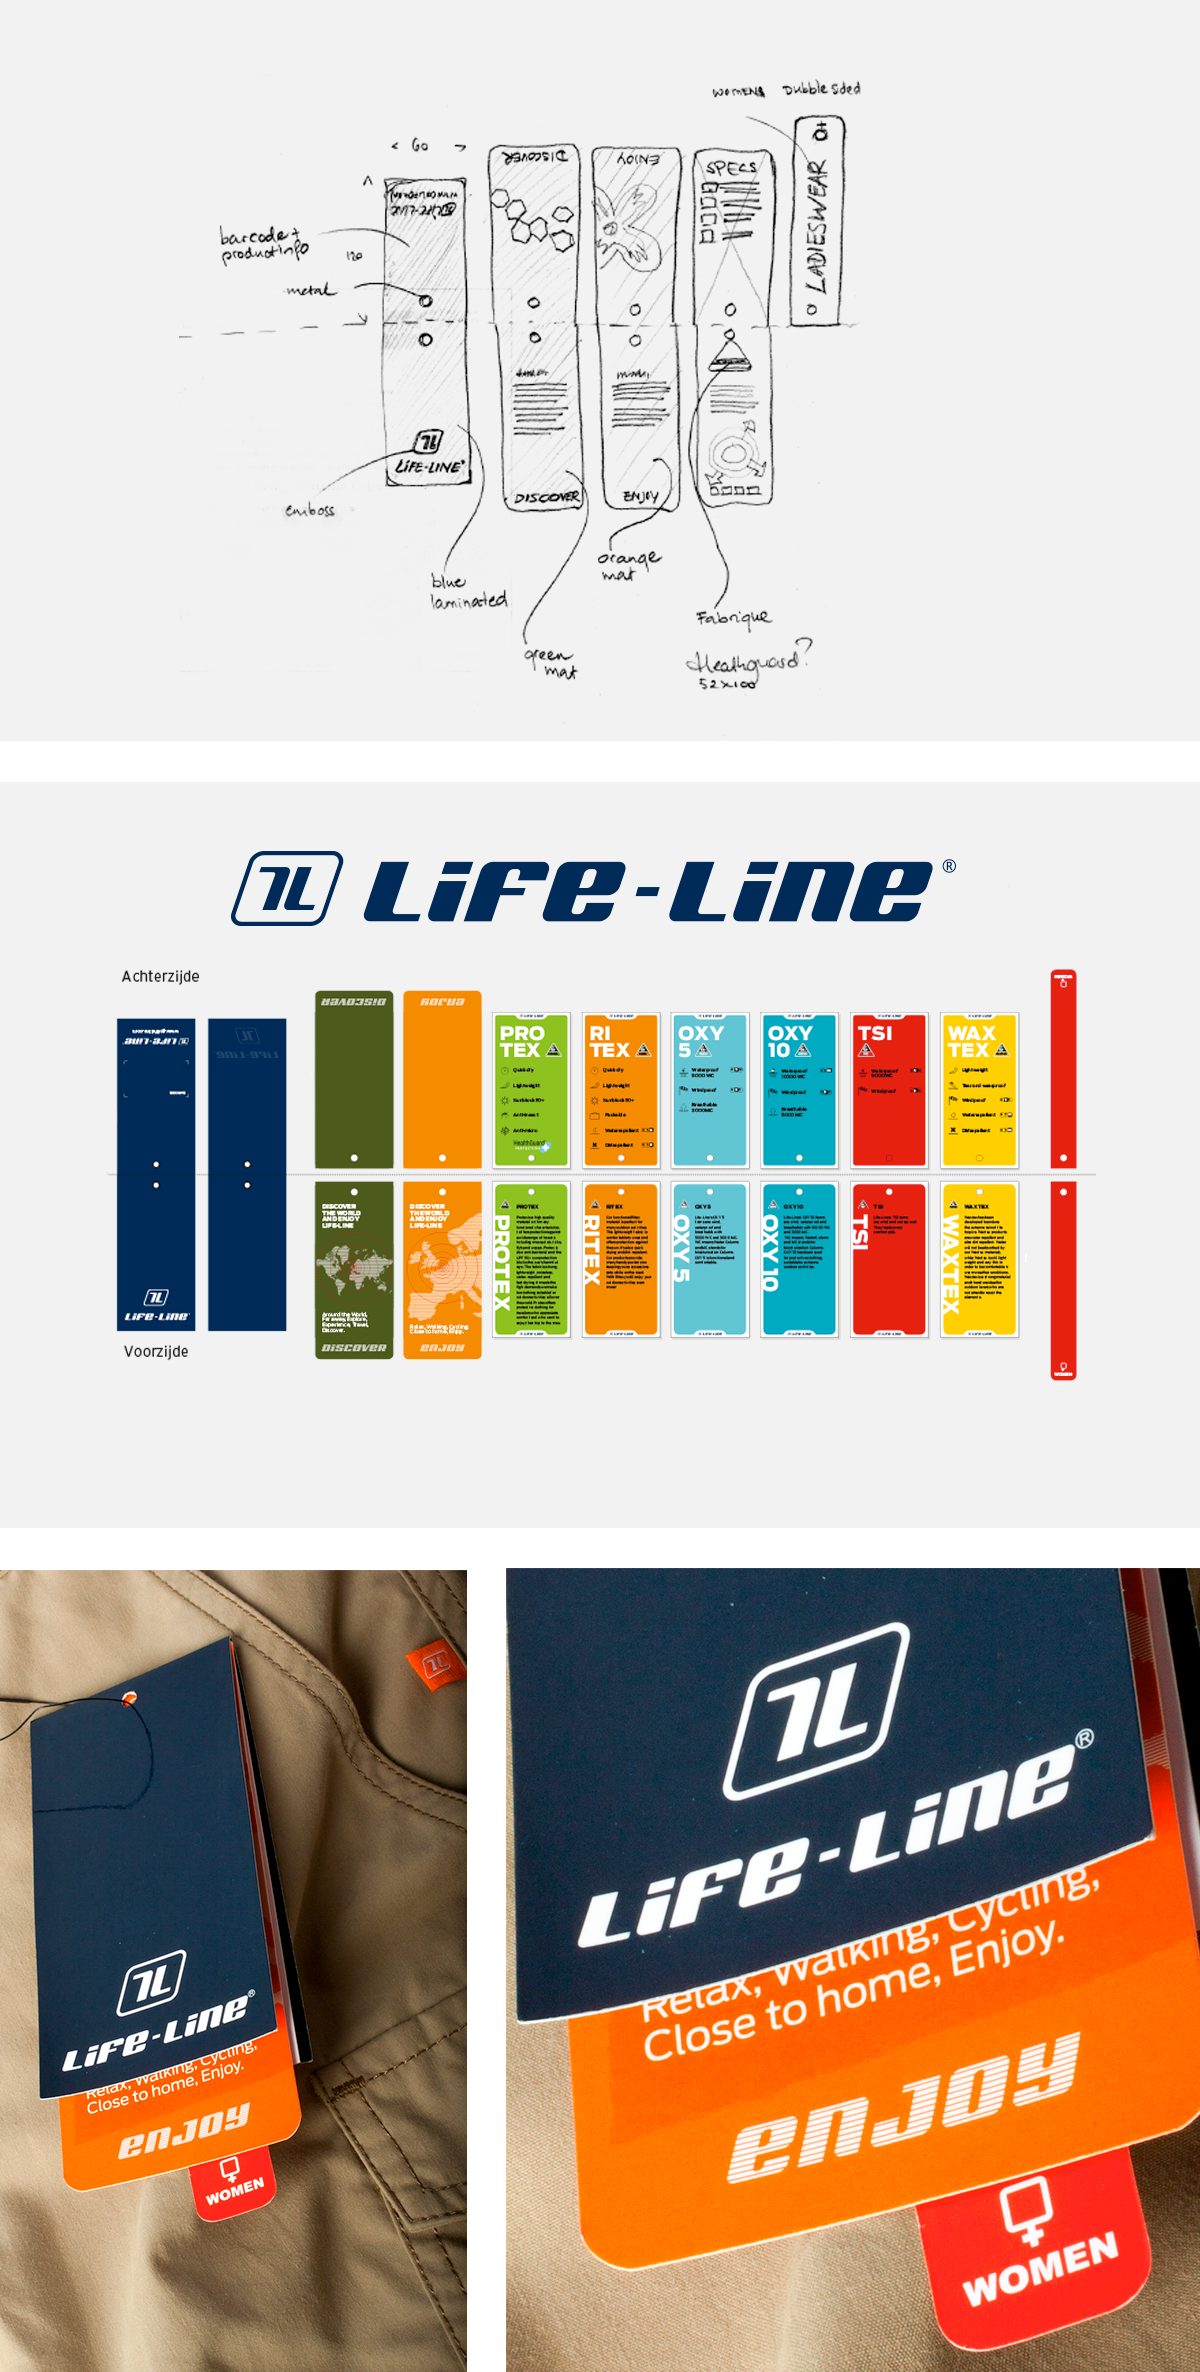 Life-Line - kleding collectie presentatie concept